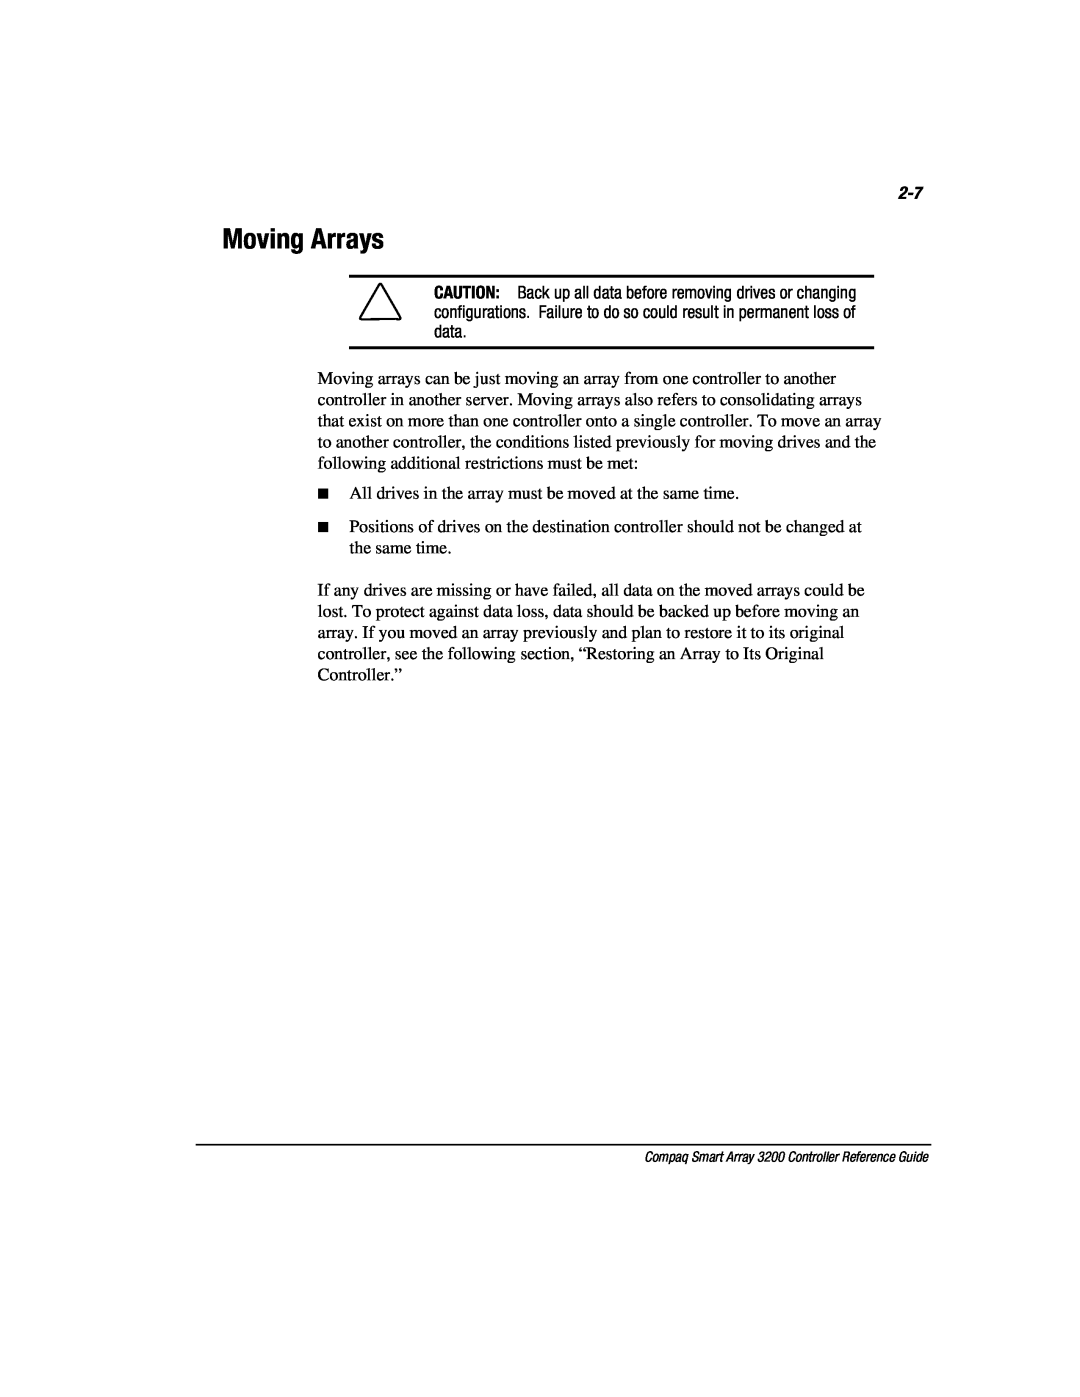 Compaq 3200 manual Moving Arrays 